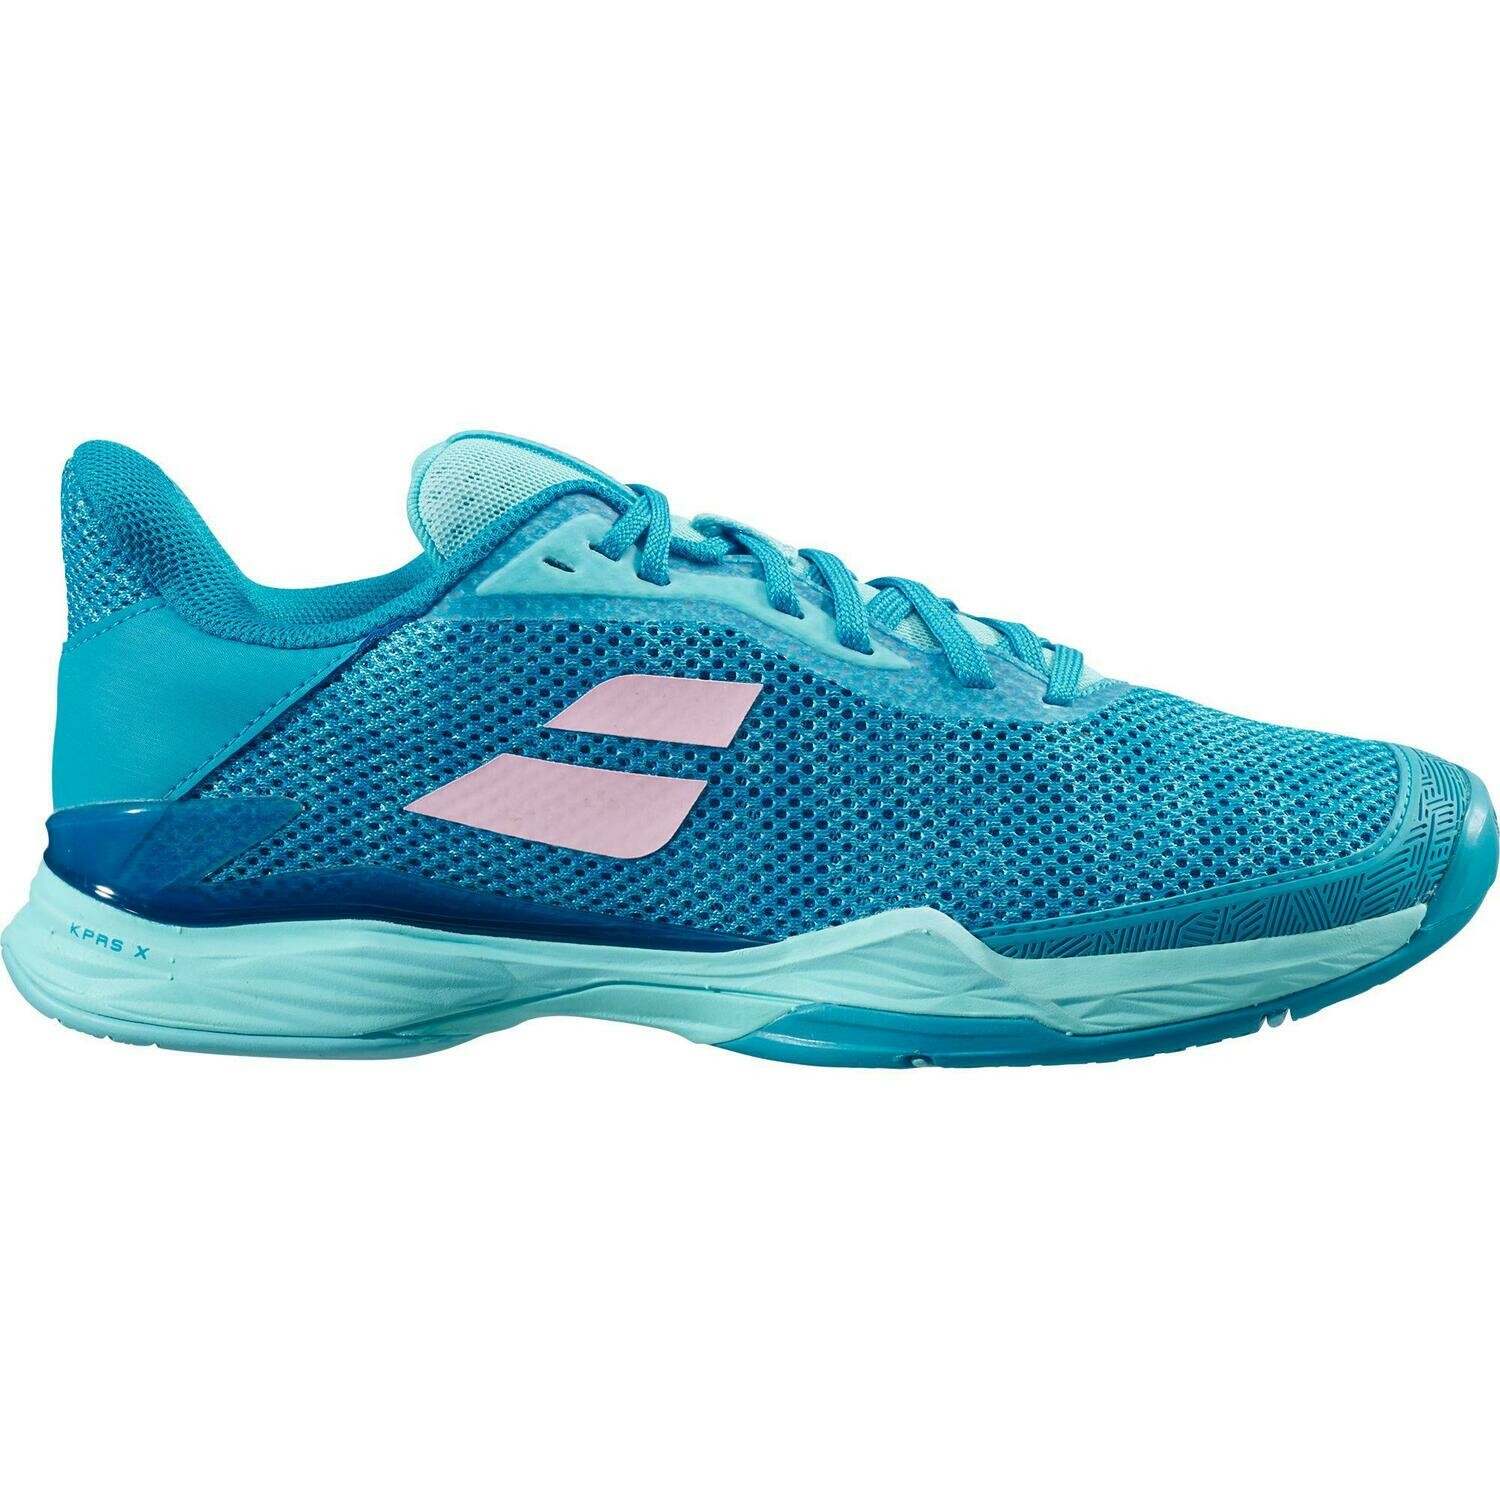 Babolat Jet Tere Women's All Court Tennis Shoes - Blue